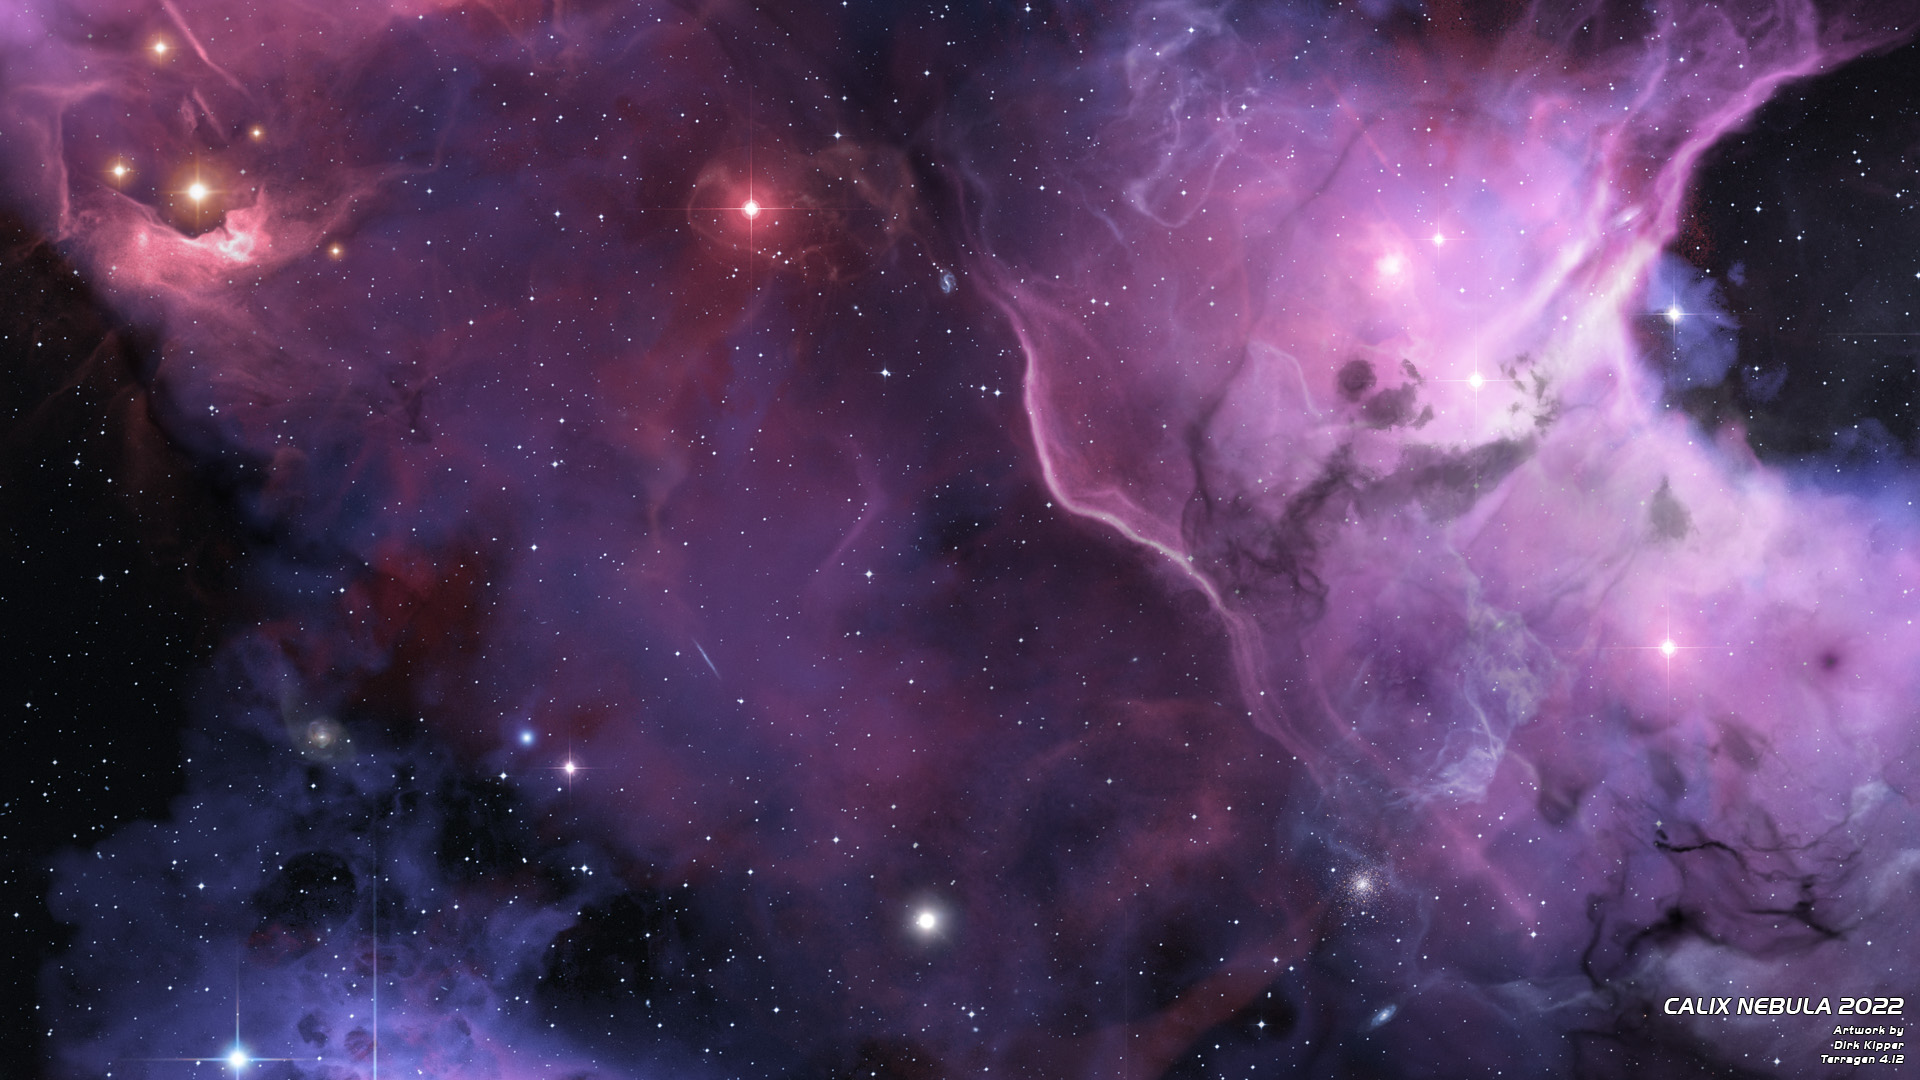 Calix Nebula (Zoom).jpg